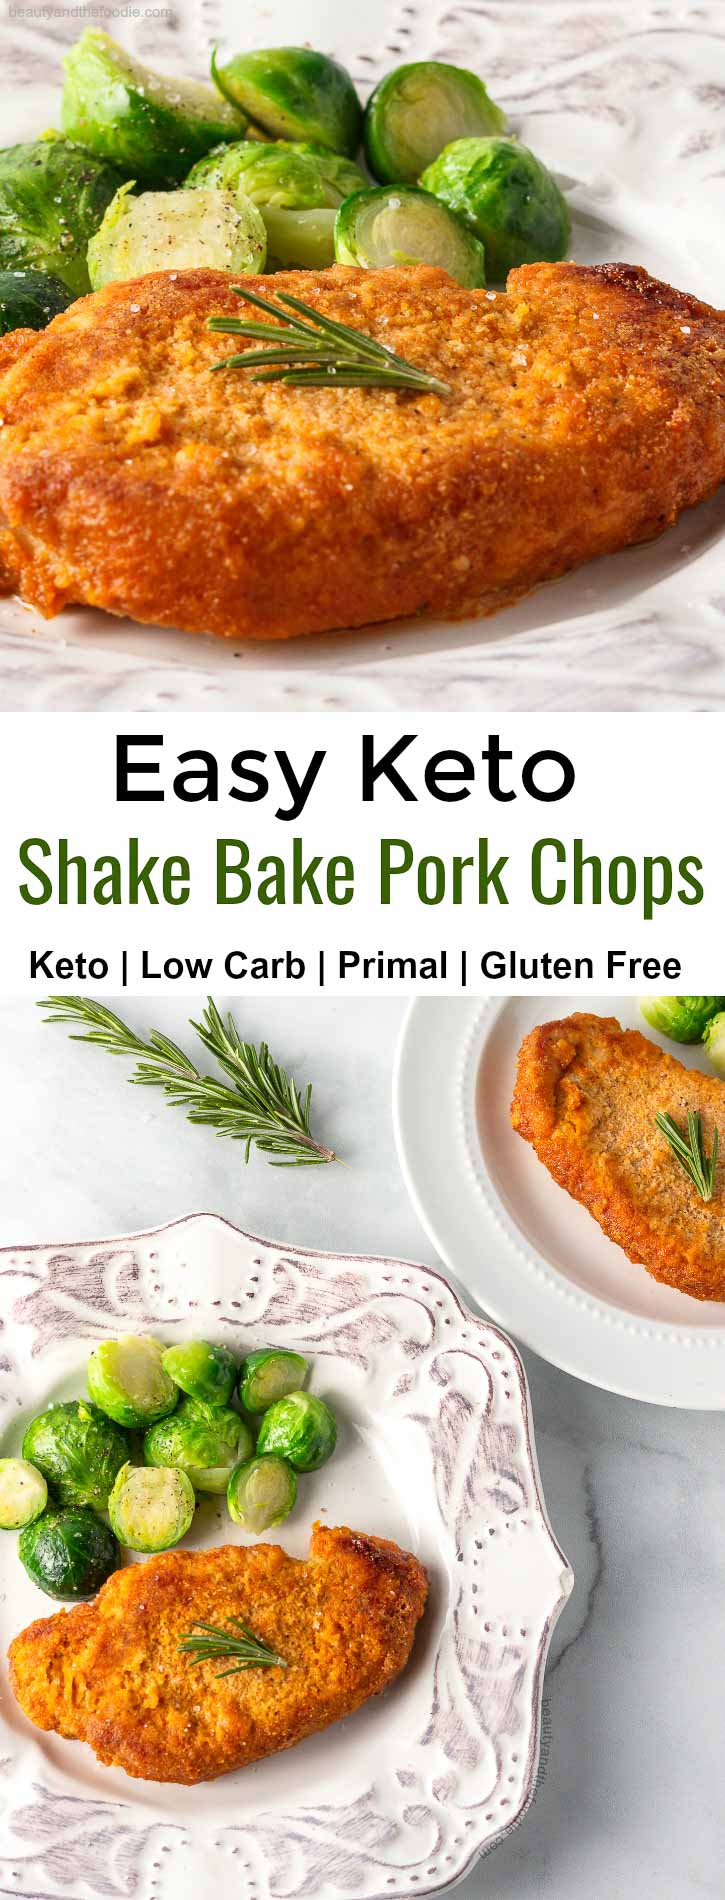 Easy Keto Shake Bake Pork Chops